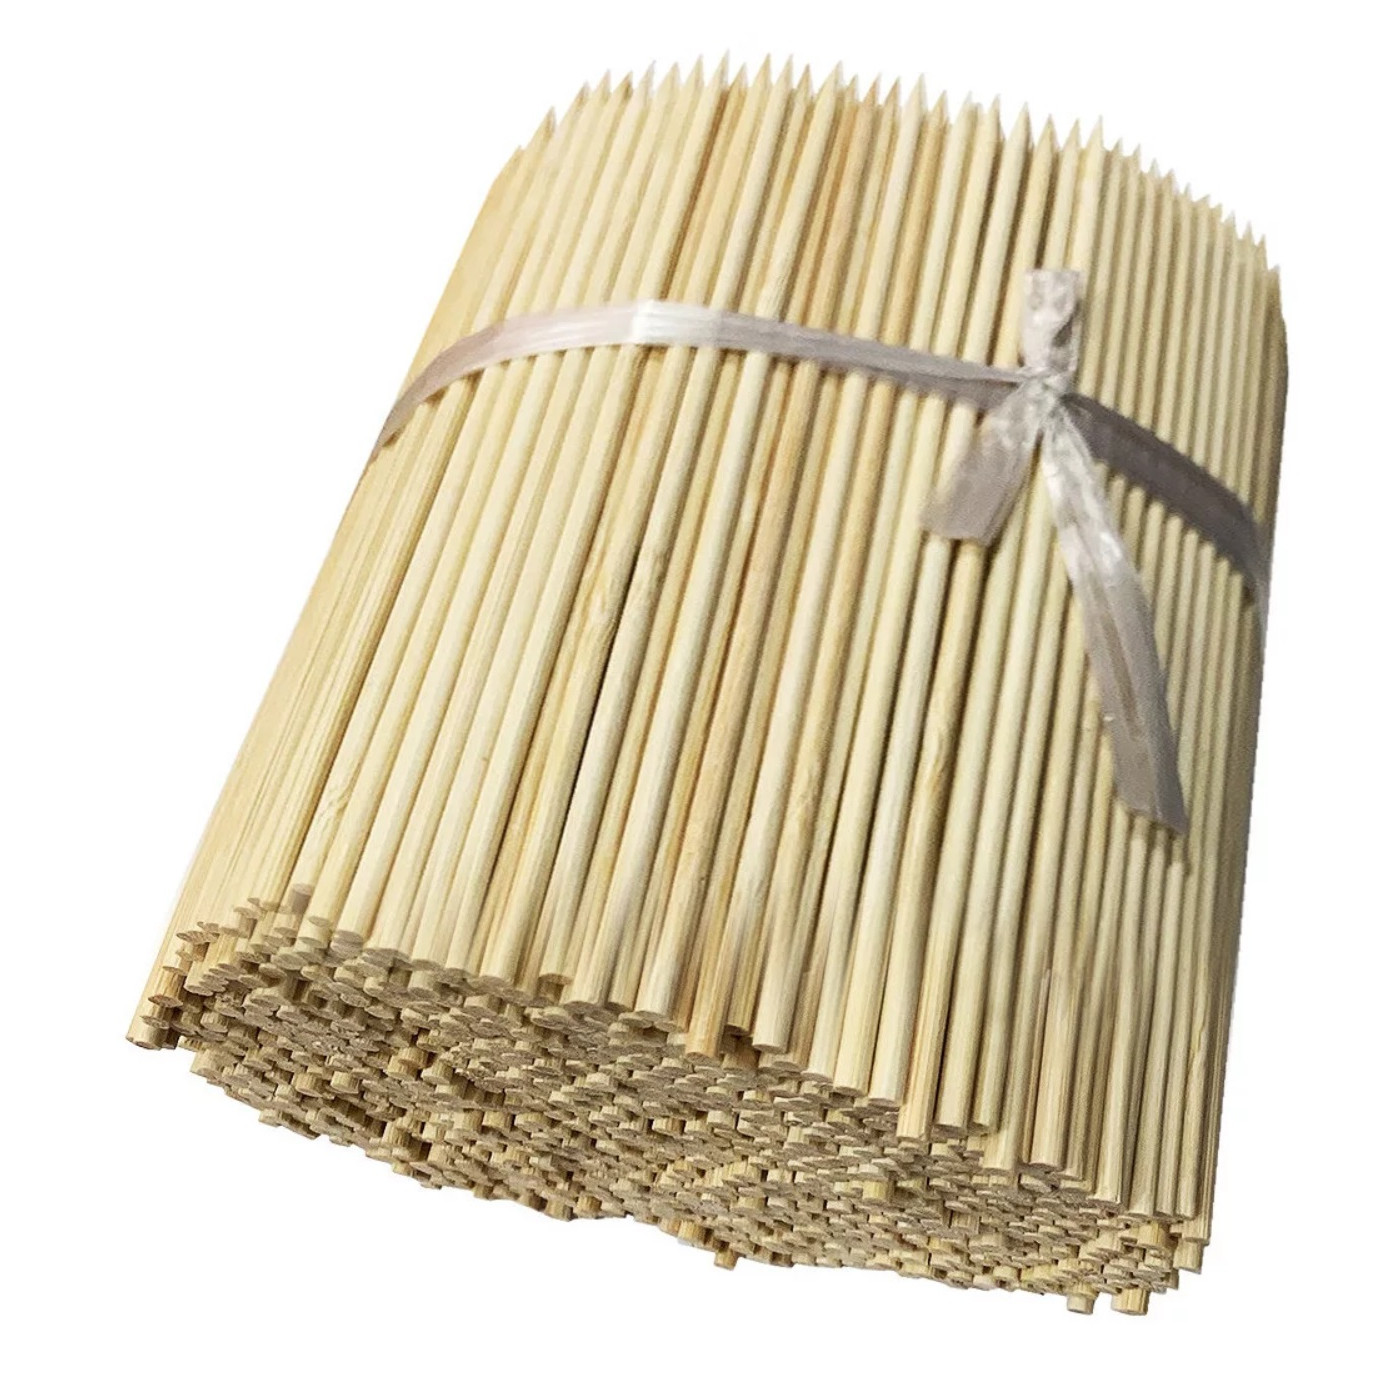 Conjunto de 1000 varas curtas de bambu (2,5 mm x 15 cm